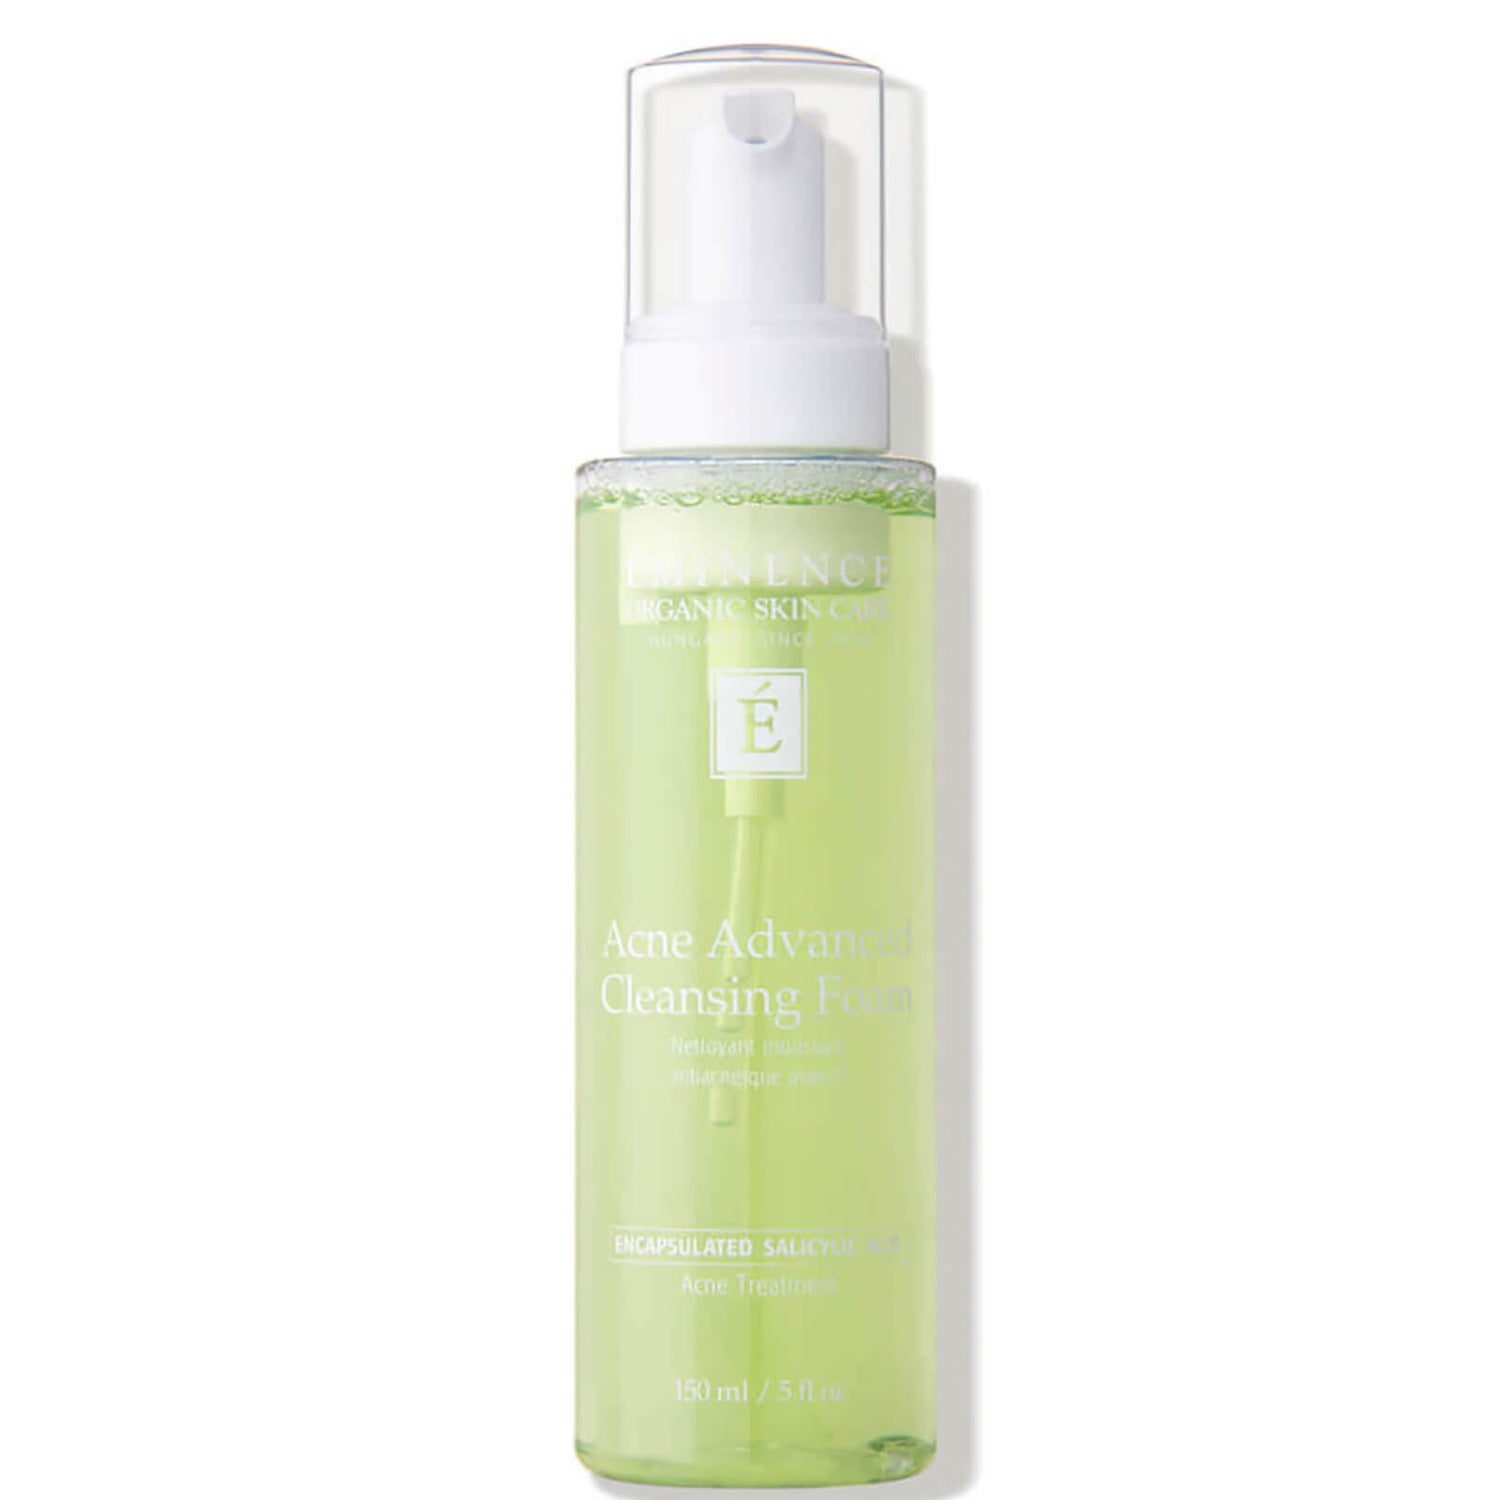 Eminence Organic Skin Care Acne Advanced Cleansing Foam 5 oz